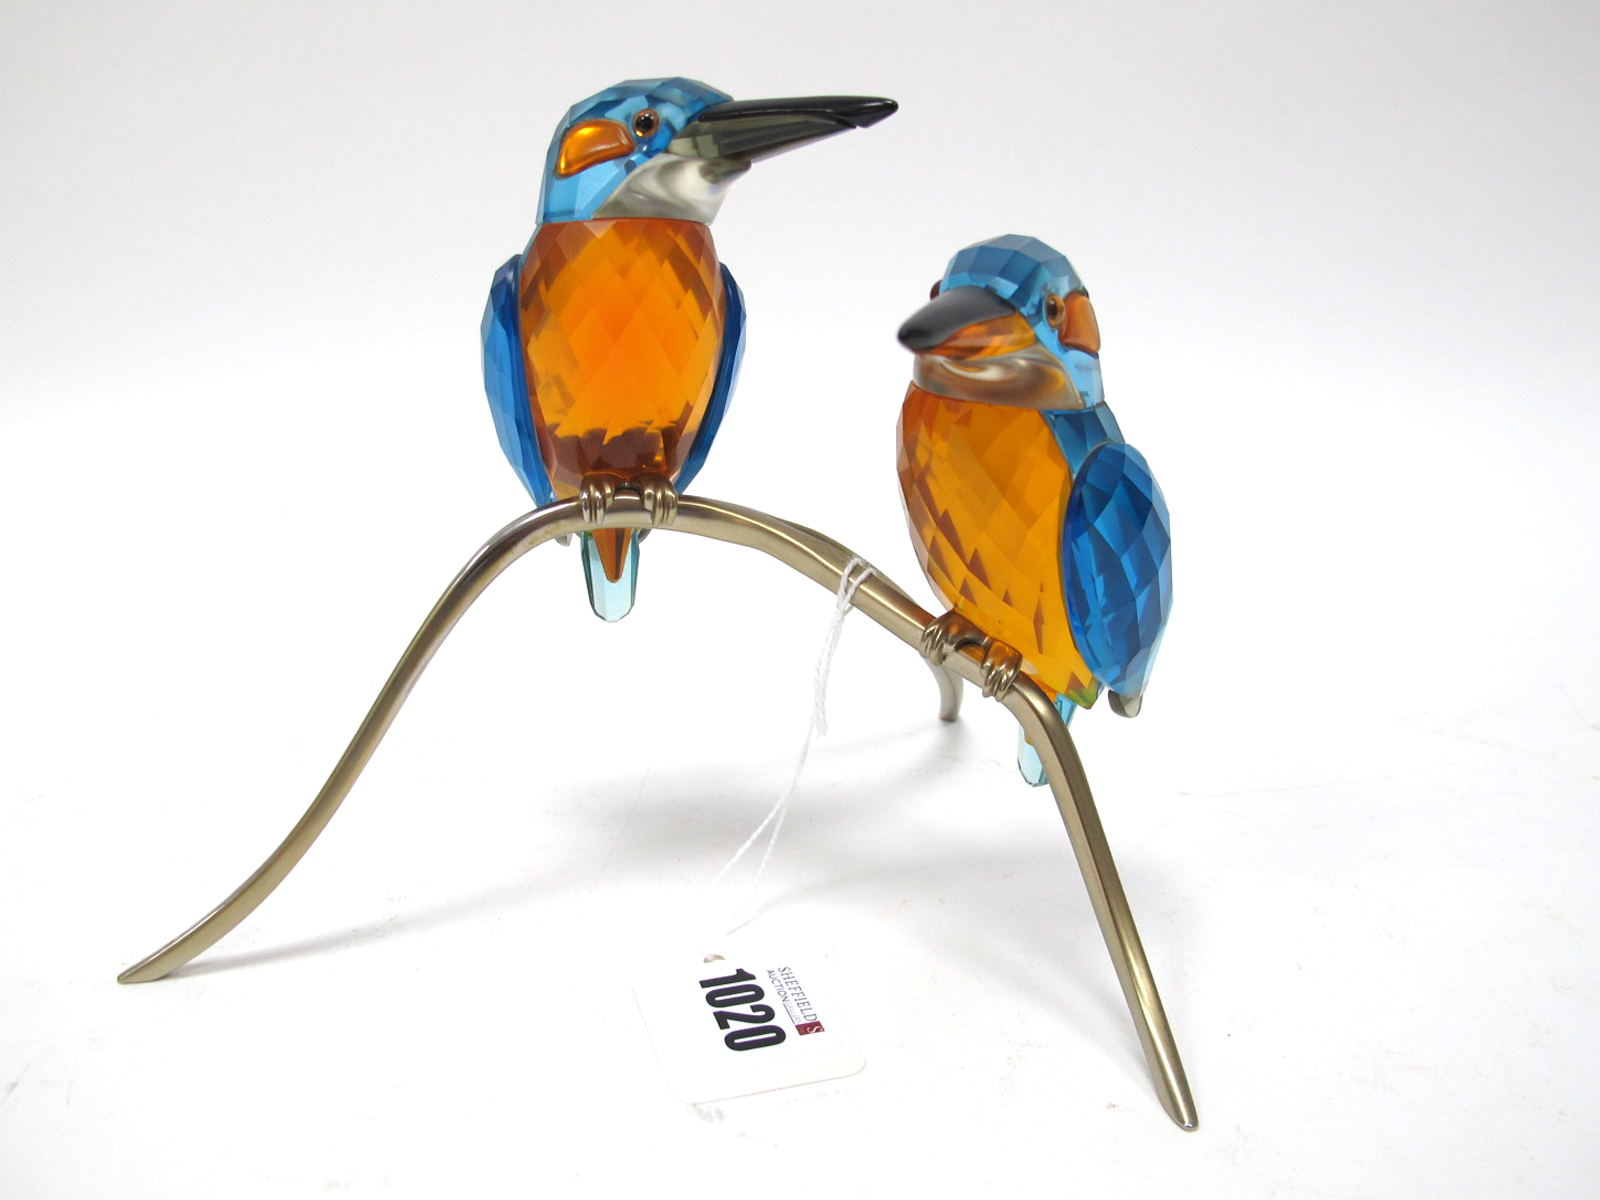 A Swarovski Crystal Paradise Bird Sculpture 'Kingfisher Couple', on metal branch, 22.5cm high.